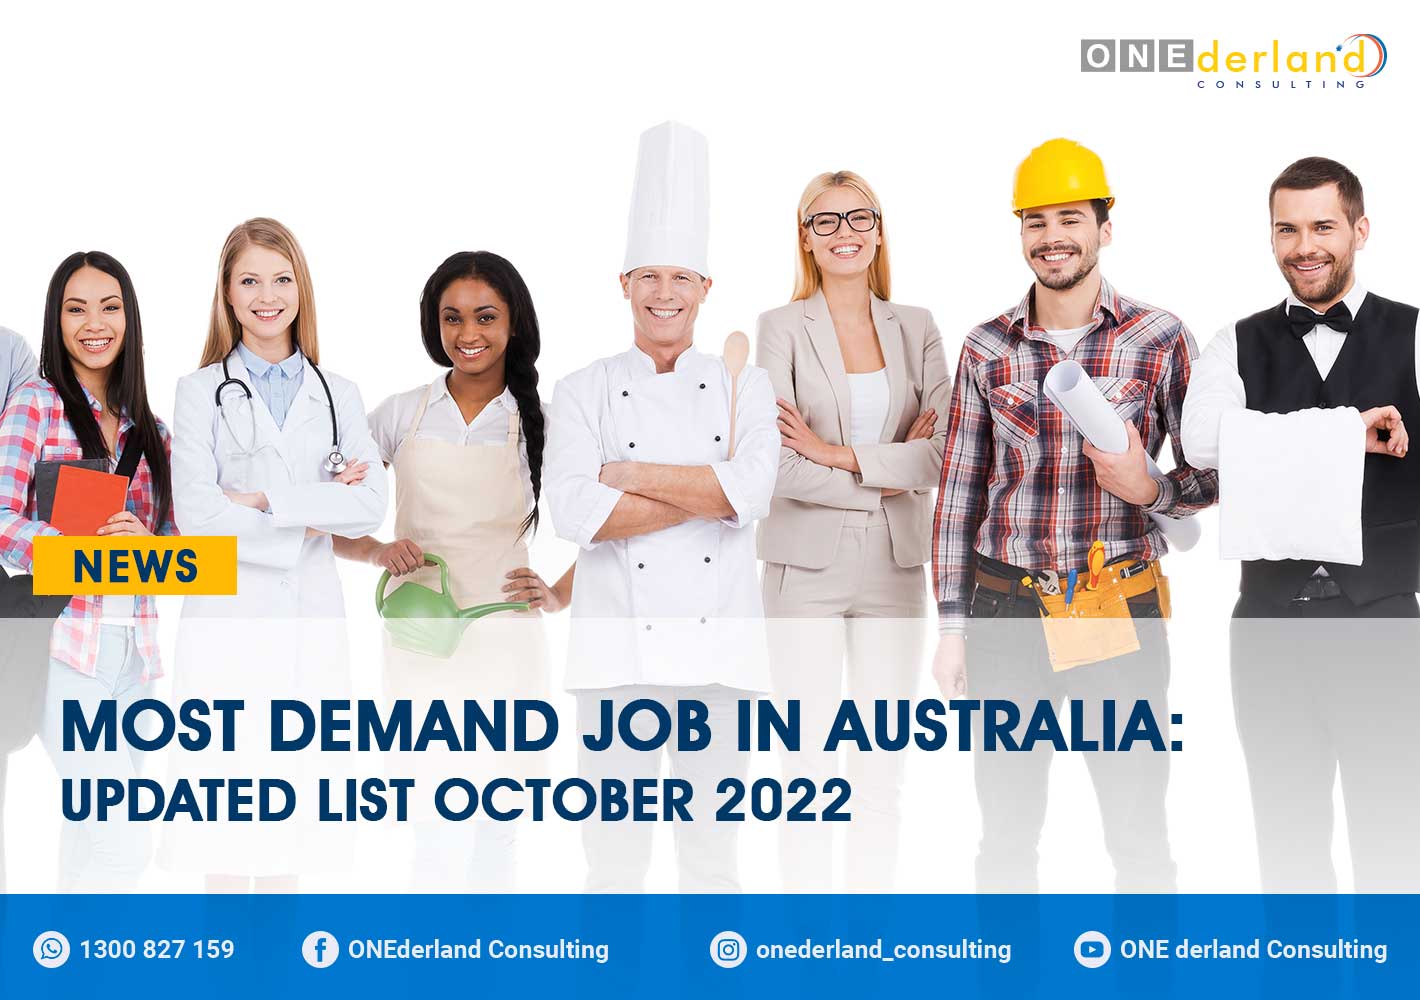 Most Demand Job in Australia Registered Nurse on First Ranking